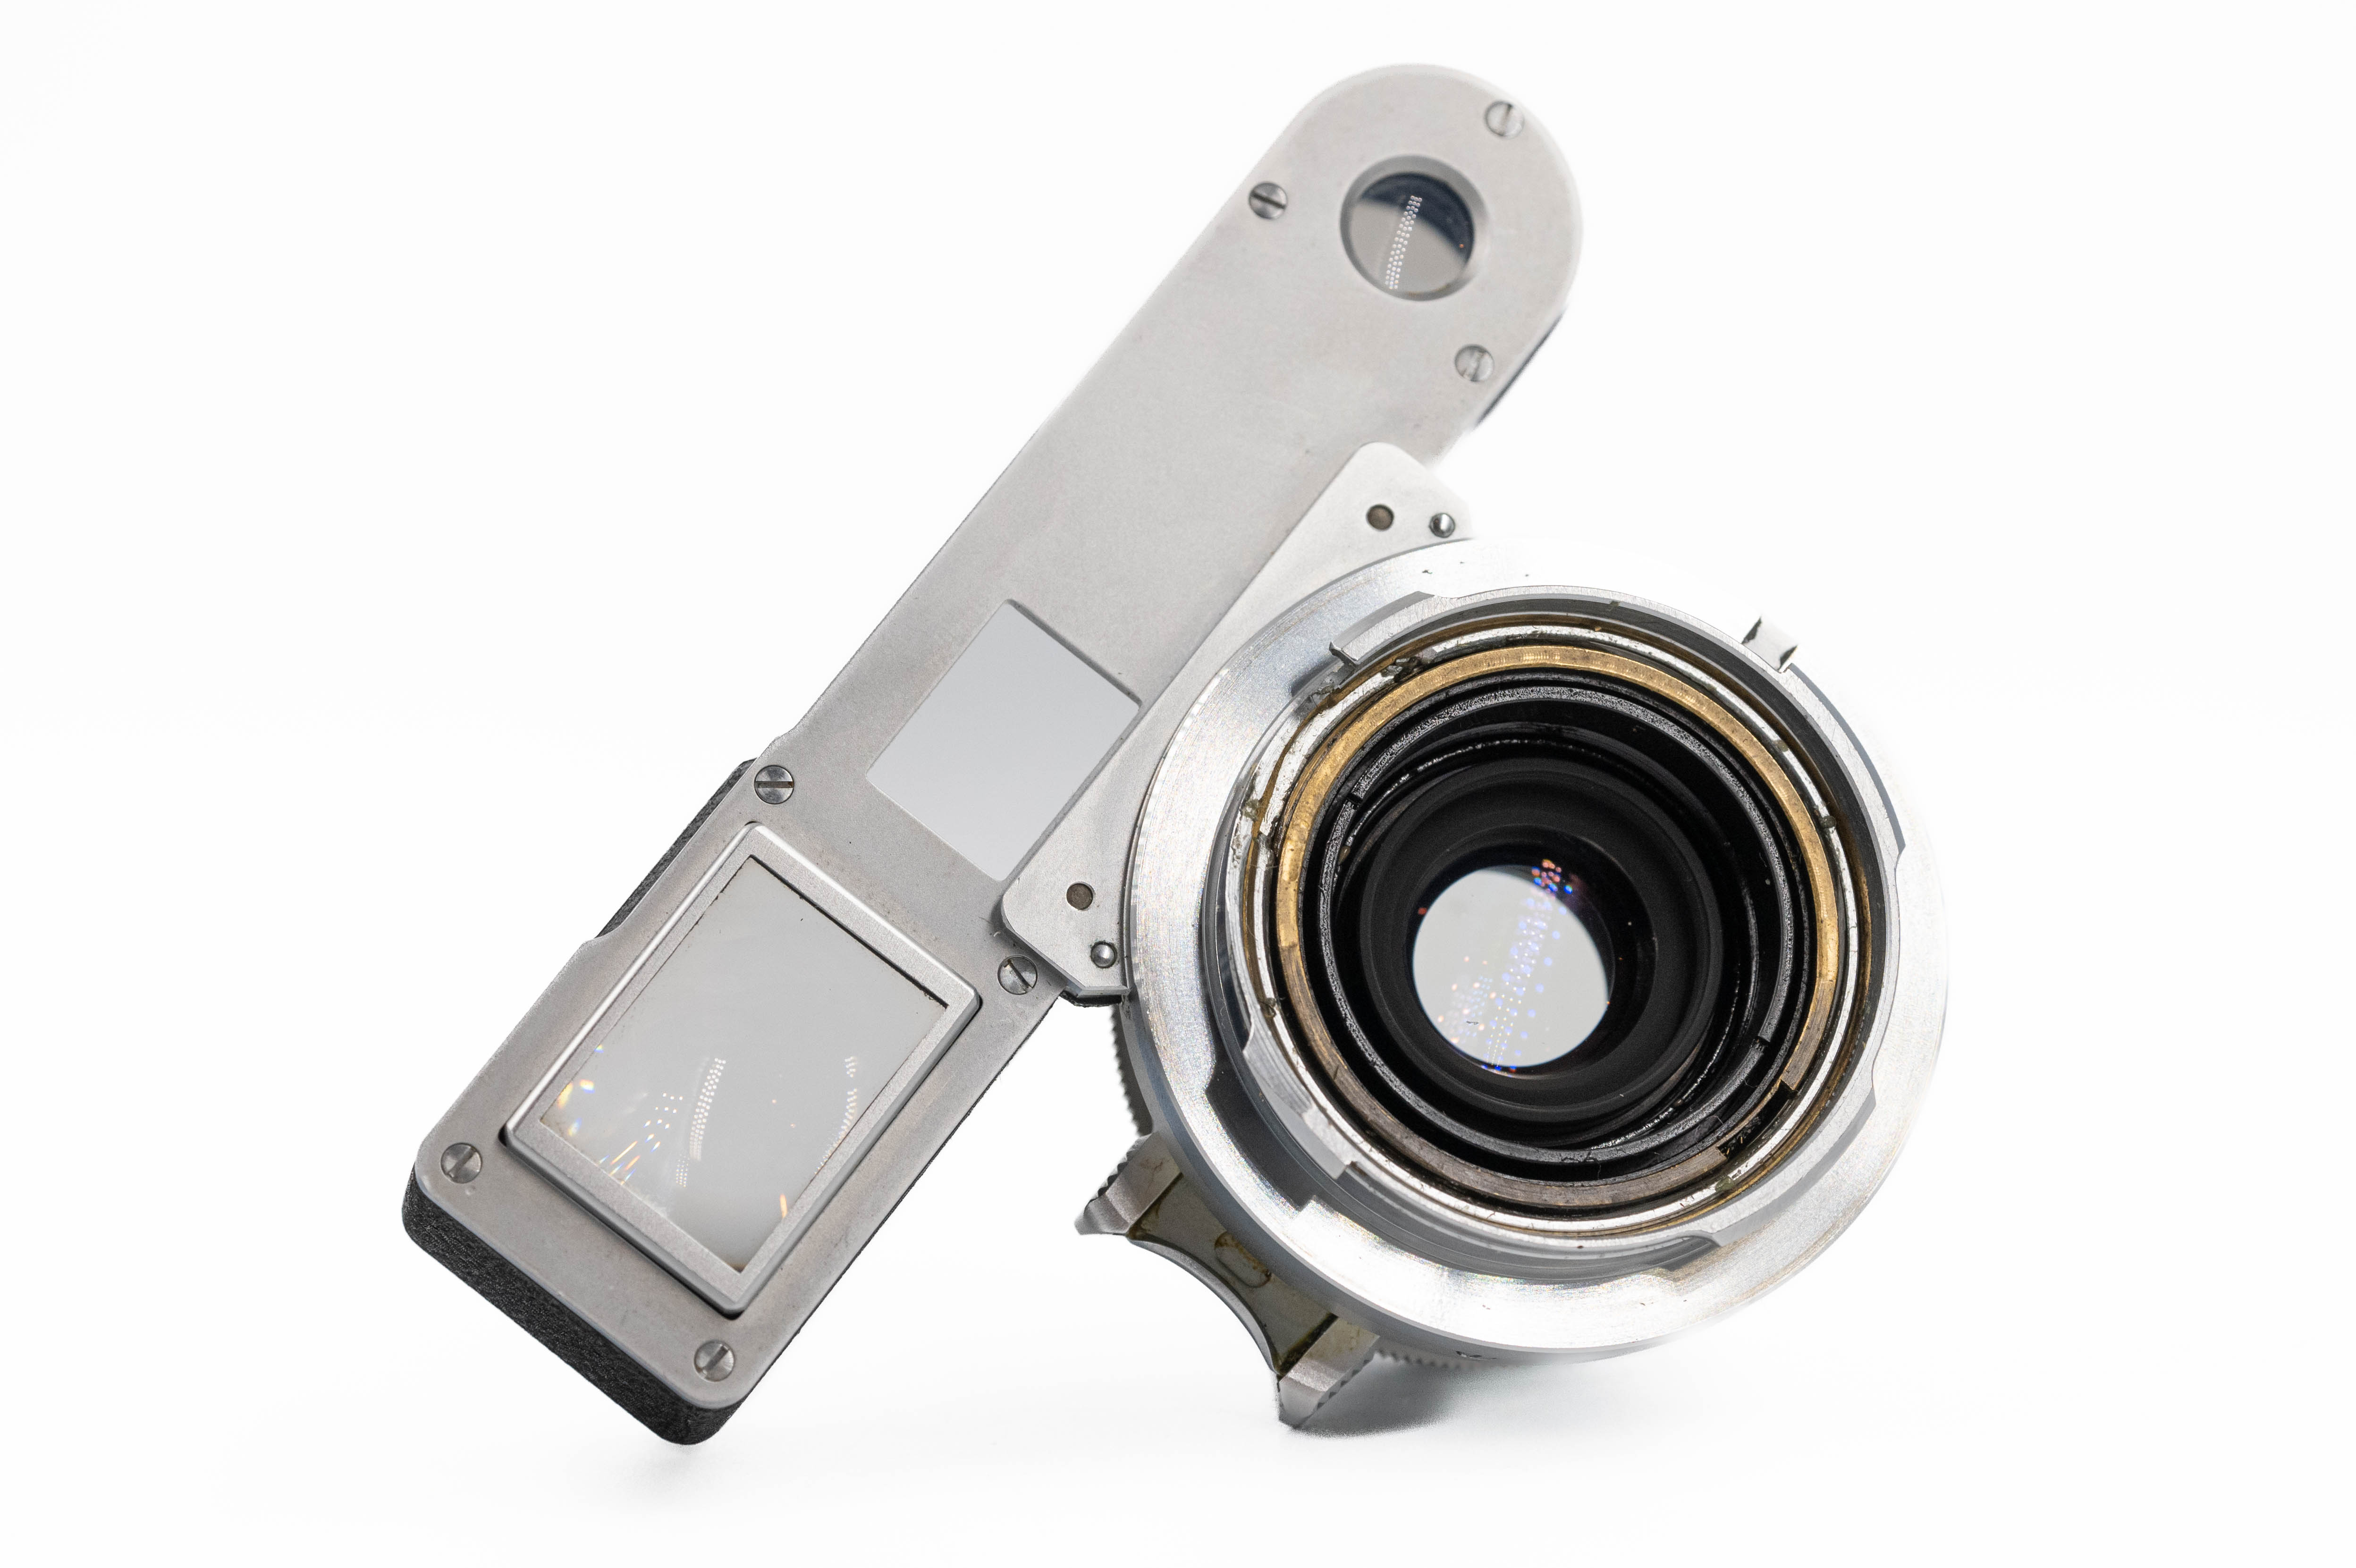 Leica Summaron-M 35mm f/2.8 M3 with Goggles SIMOW 11106